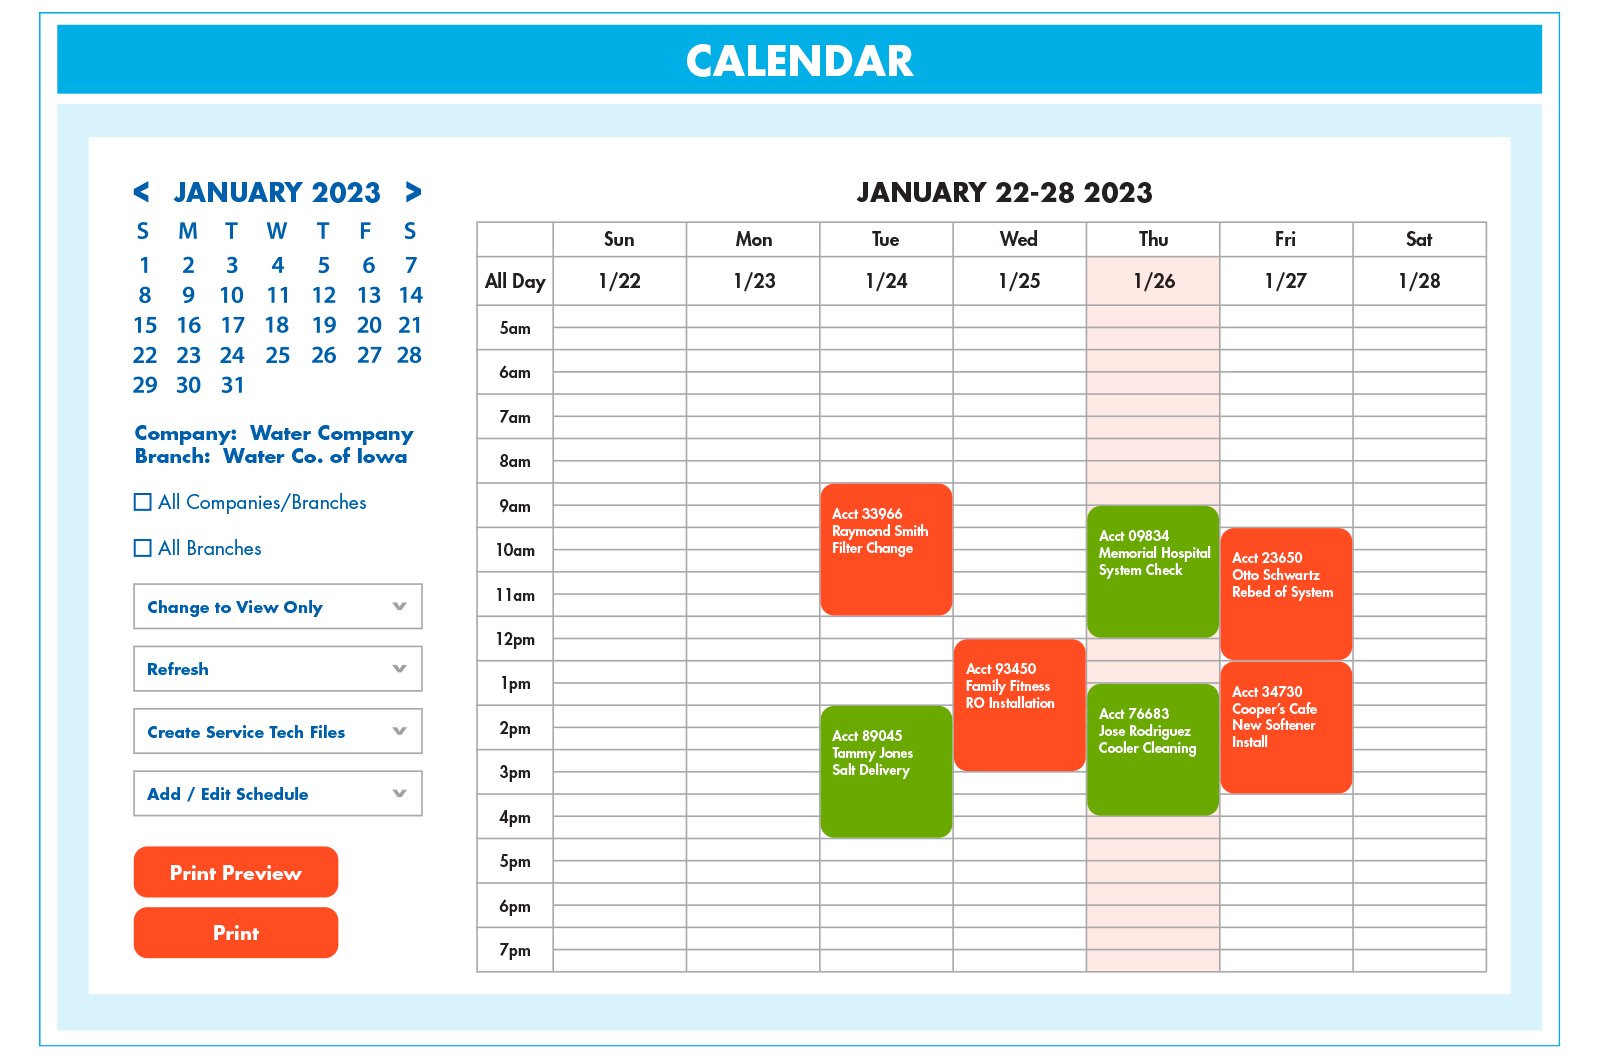 WaterFlex calendar